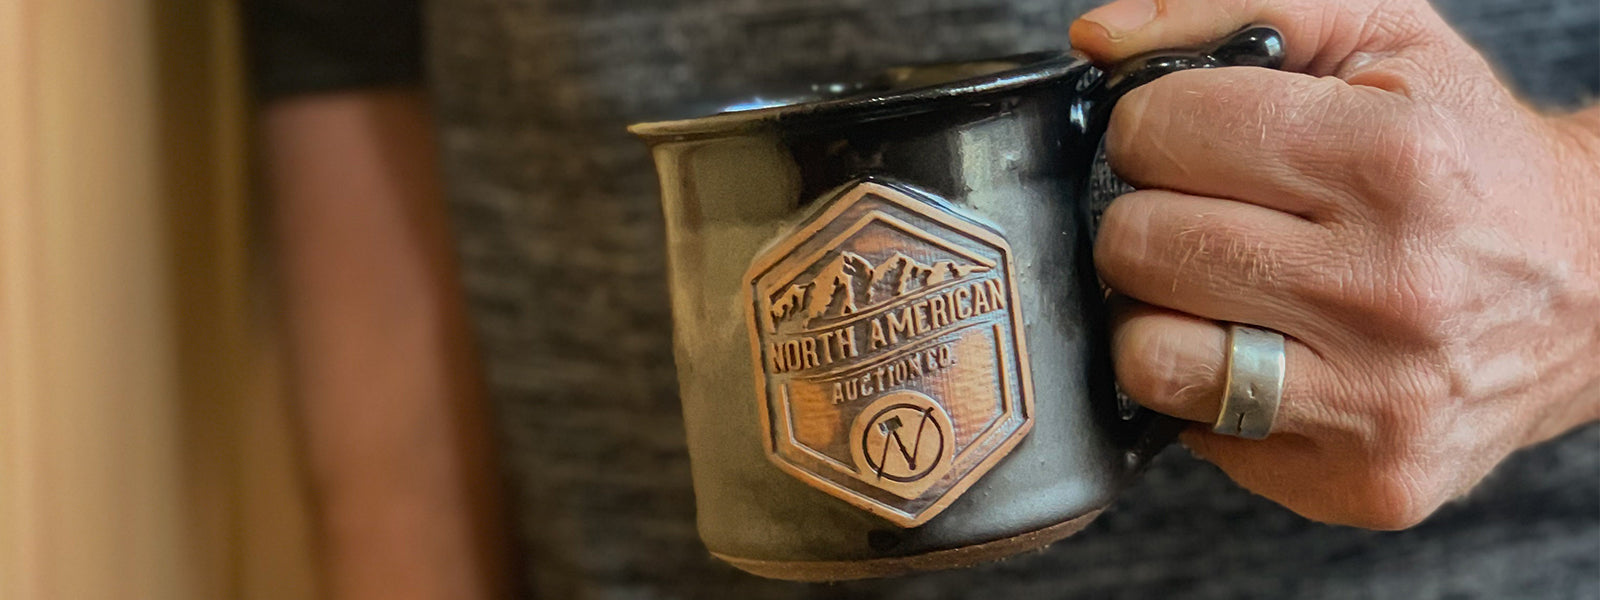 Montana Mug - Handmade Medallion Mugs - Mountain Arts Pottery